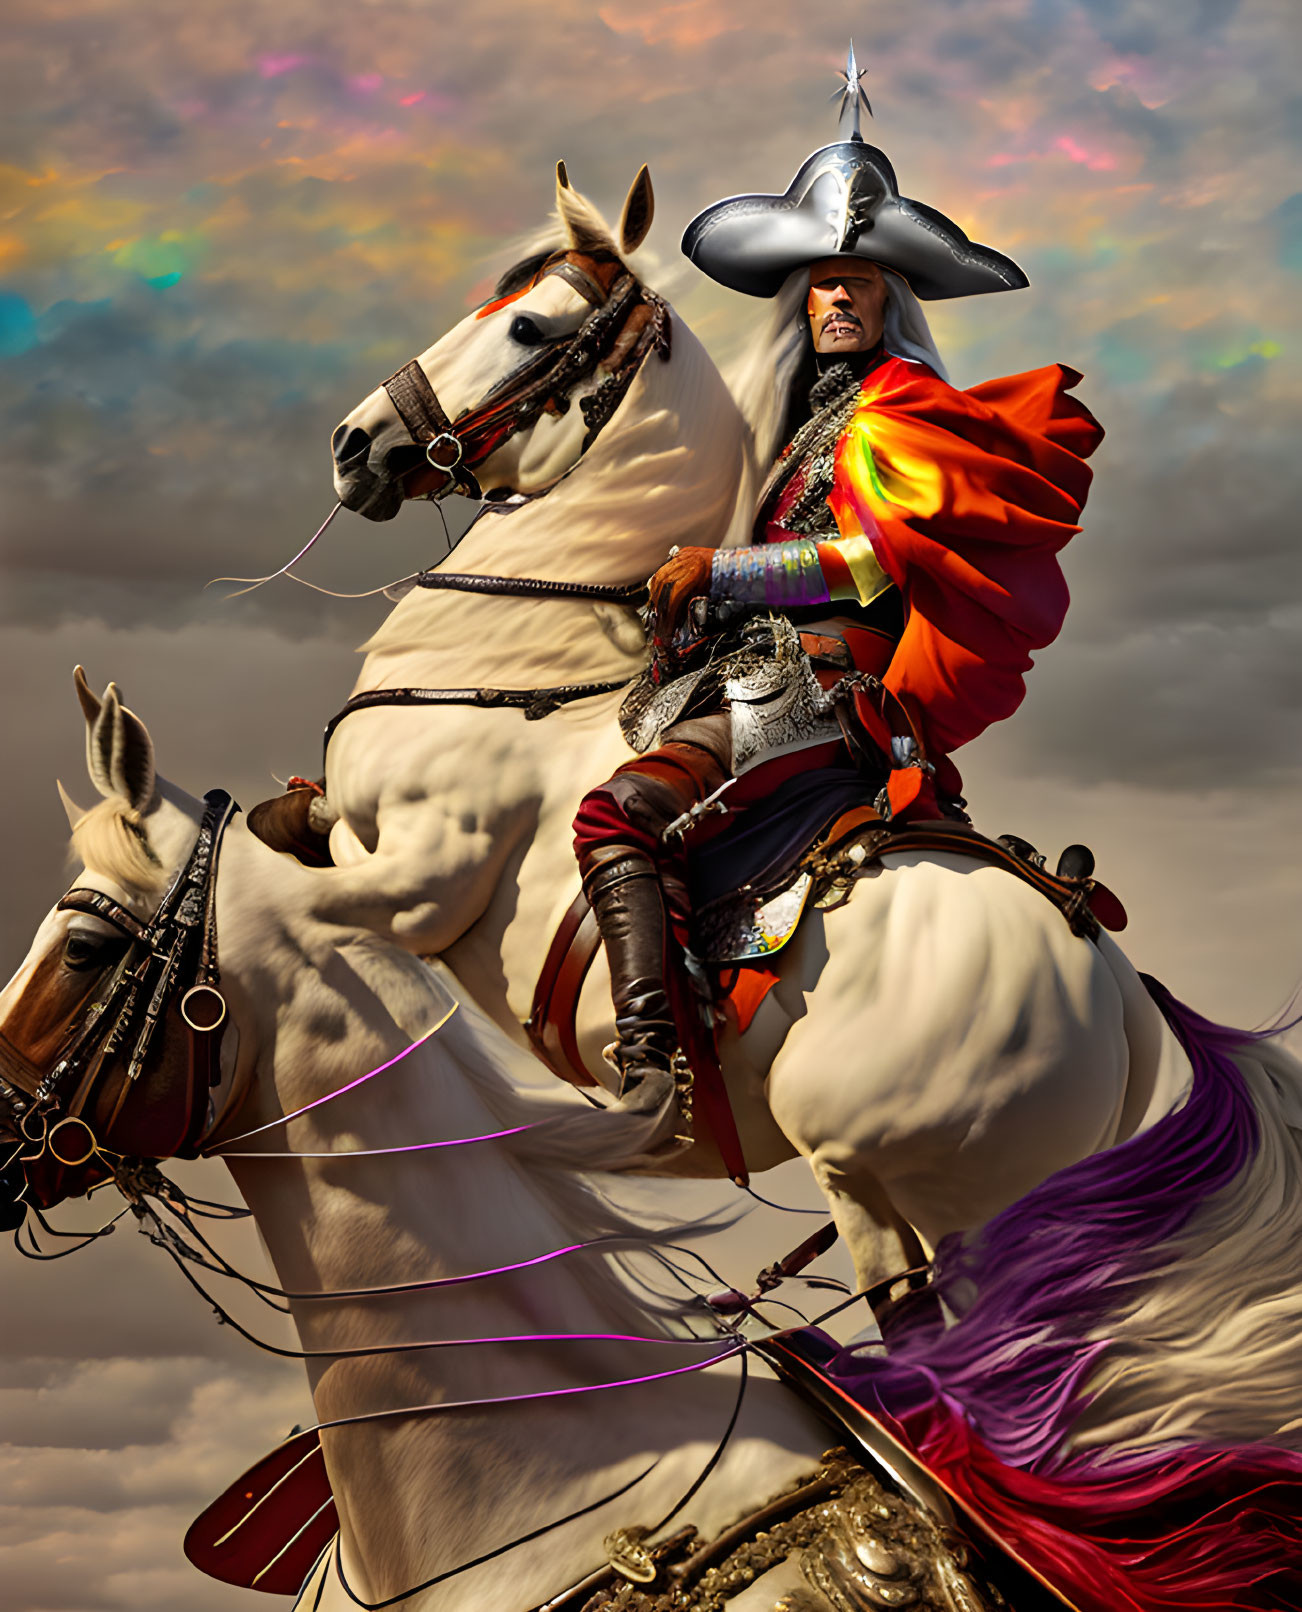 Elaborate Historical Costume Rider on White Horse under Iridescent Sky